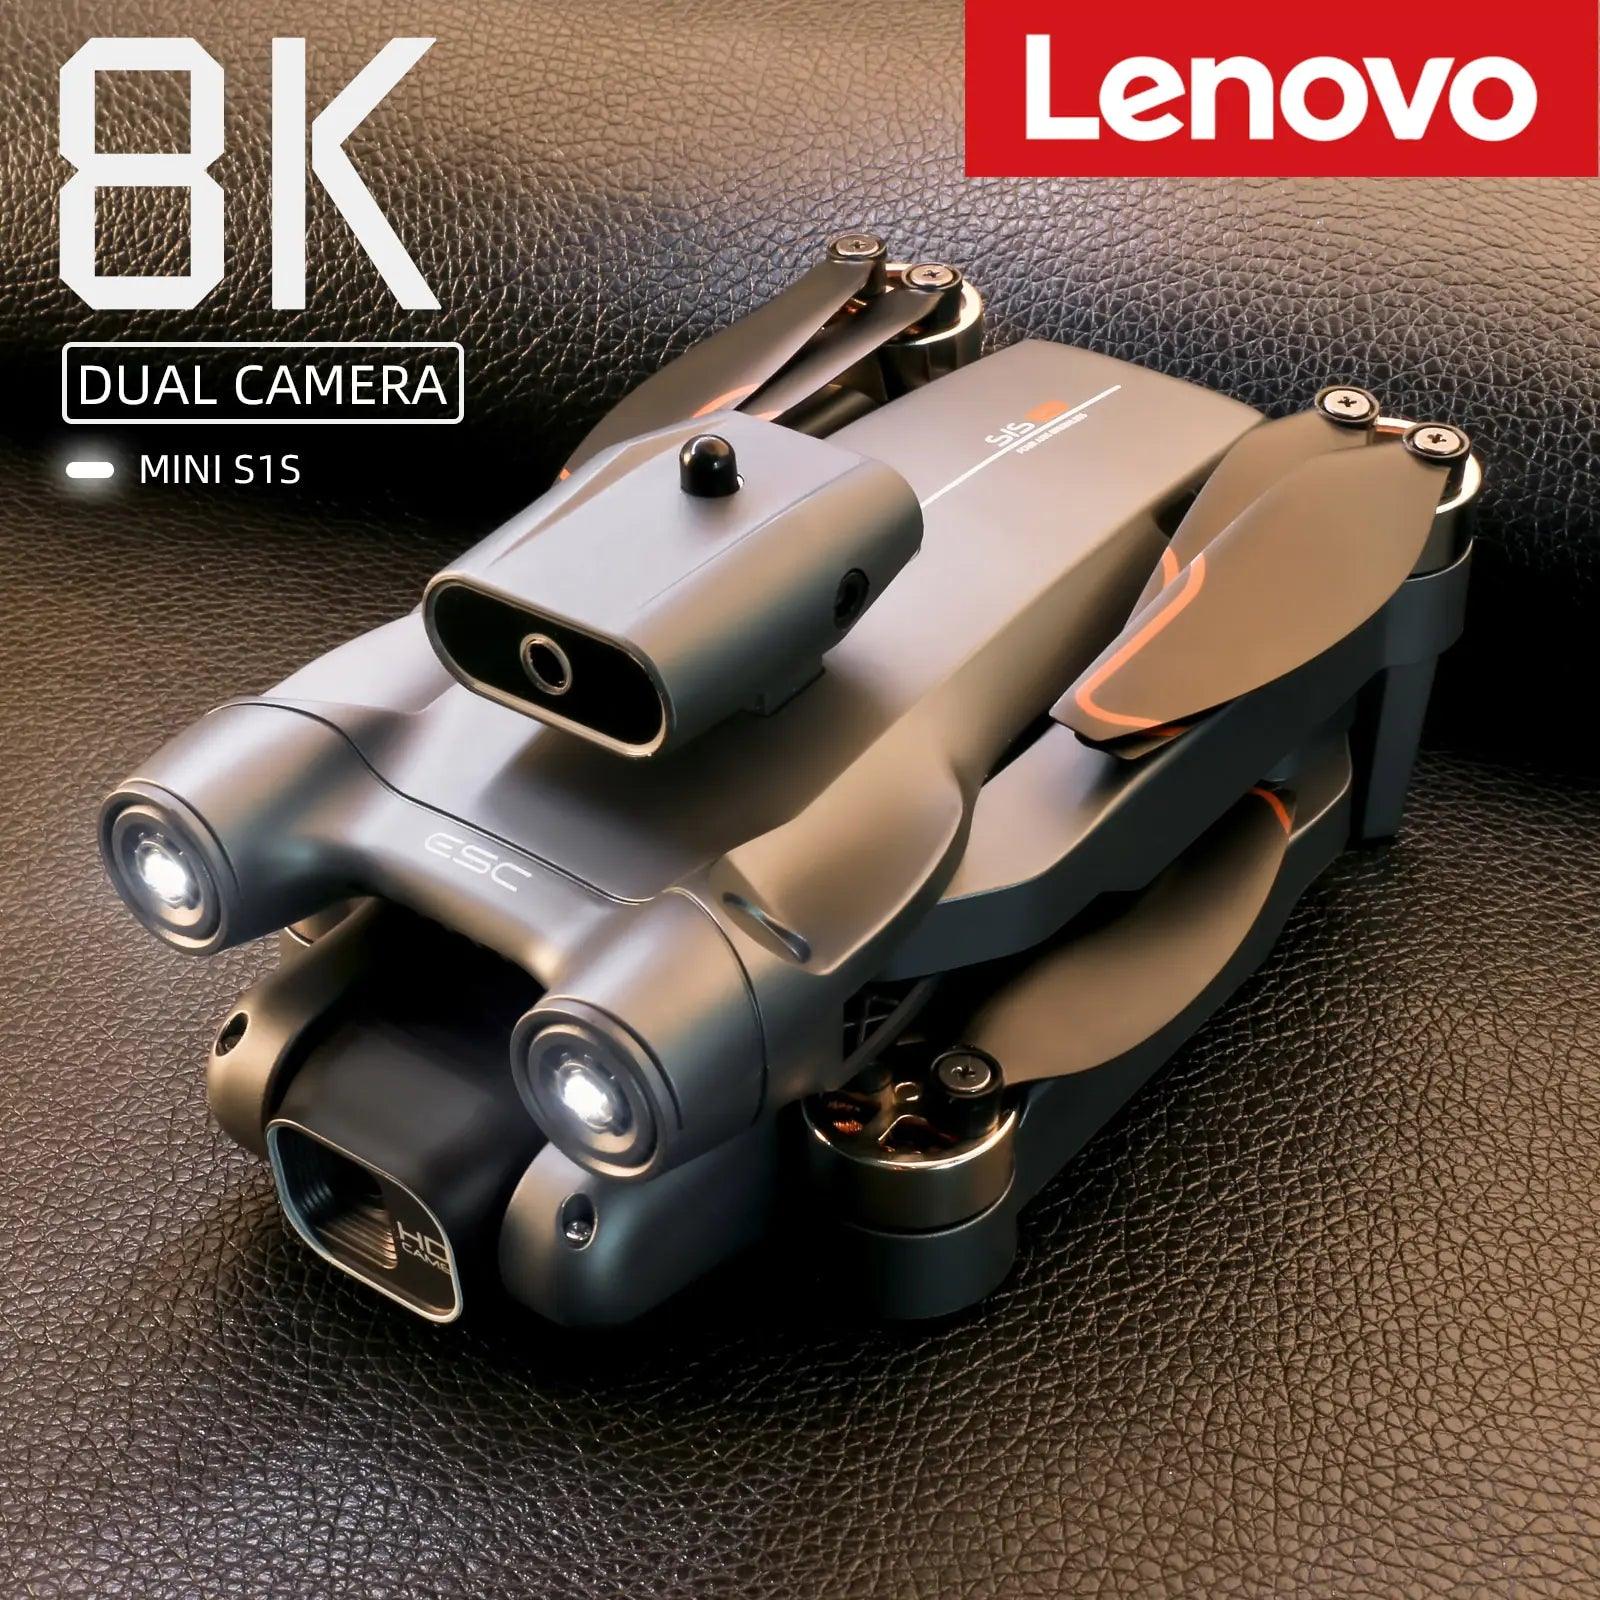 Lenovo S1S Drone - ACO Marketplace